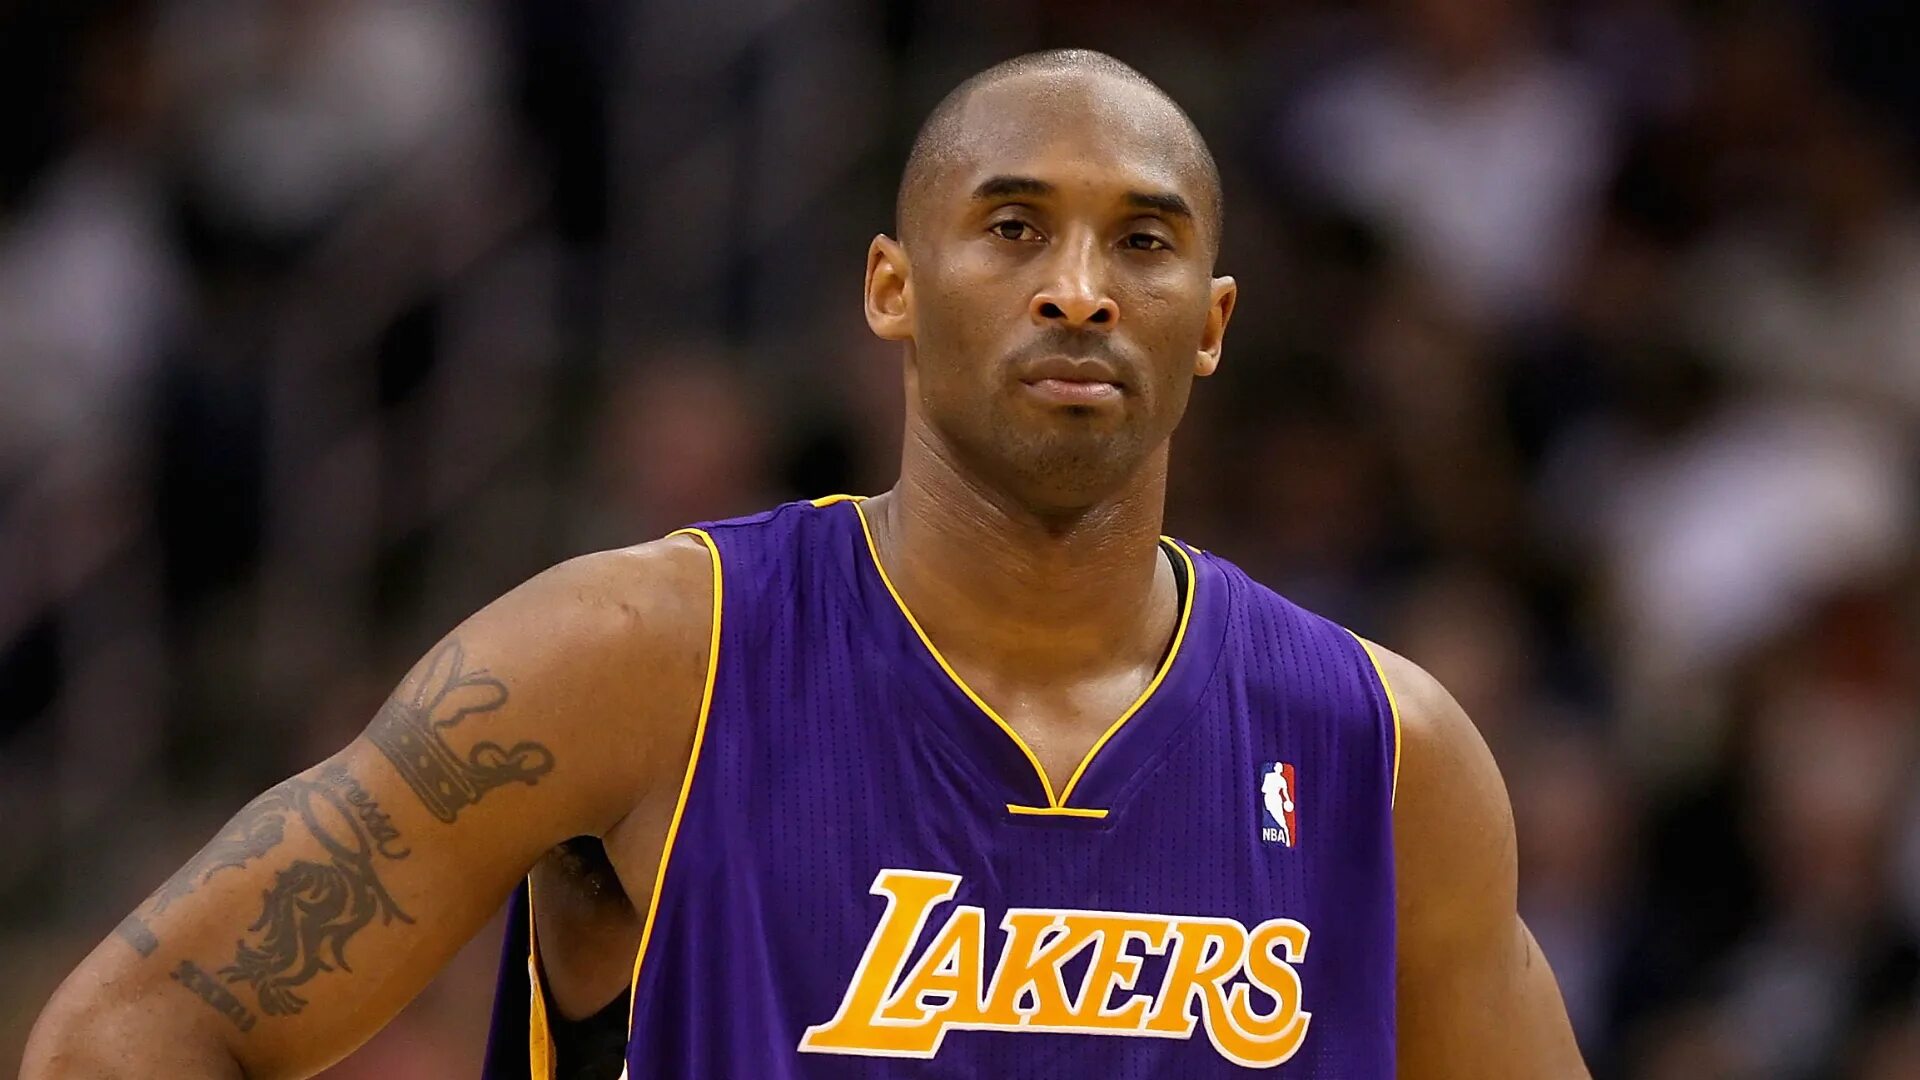 La lakers. Коби Брайант. Kobe Bryant 2012. Lakers.